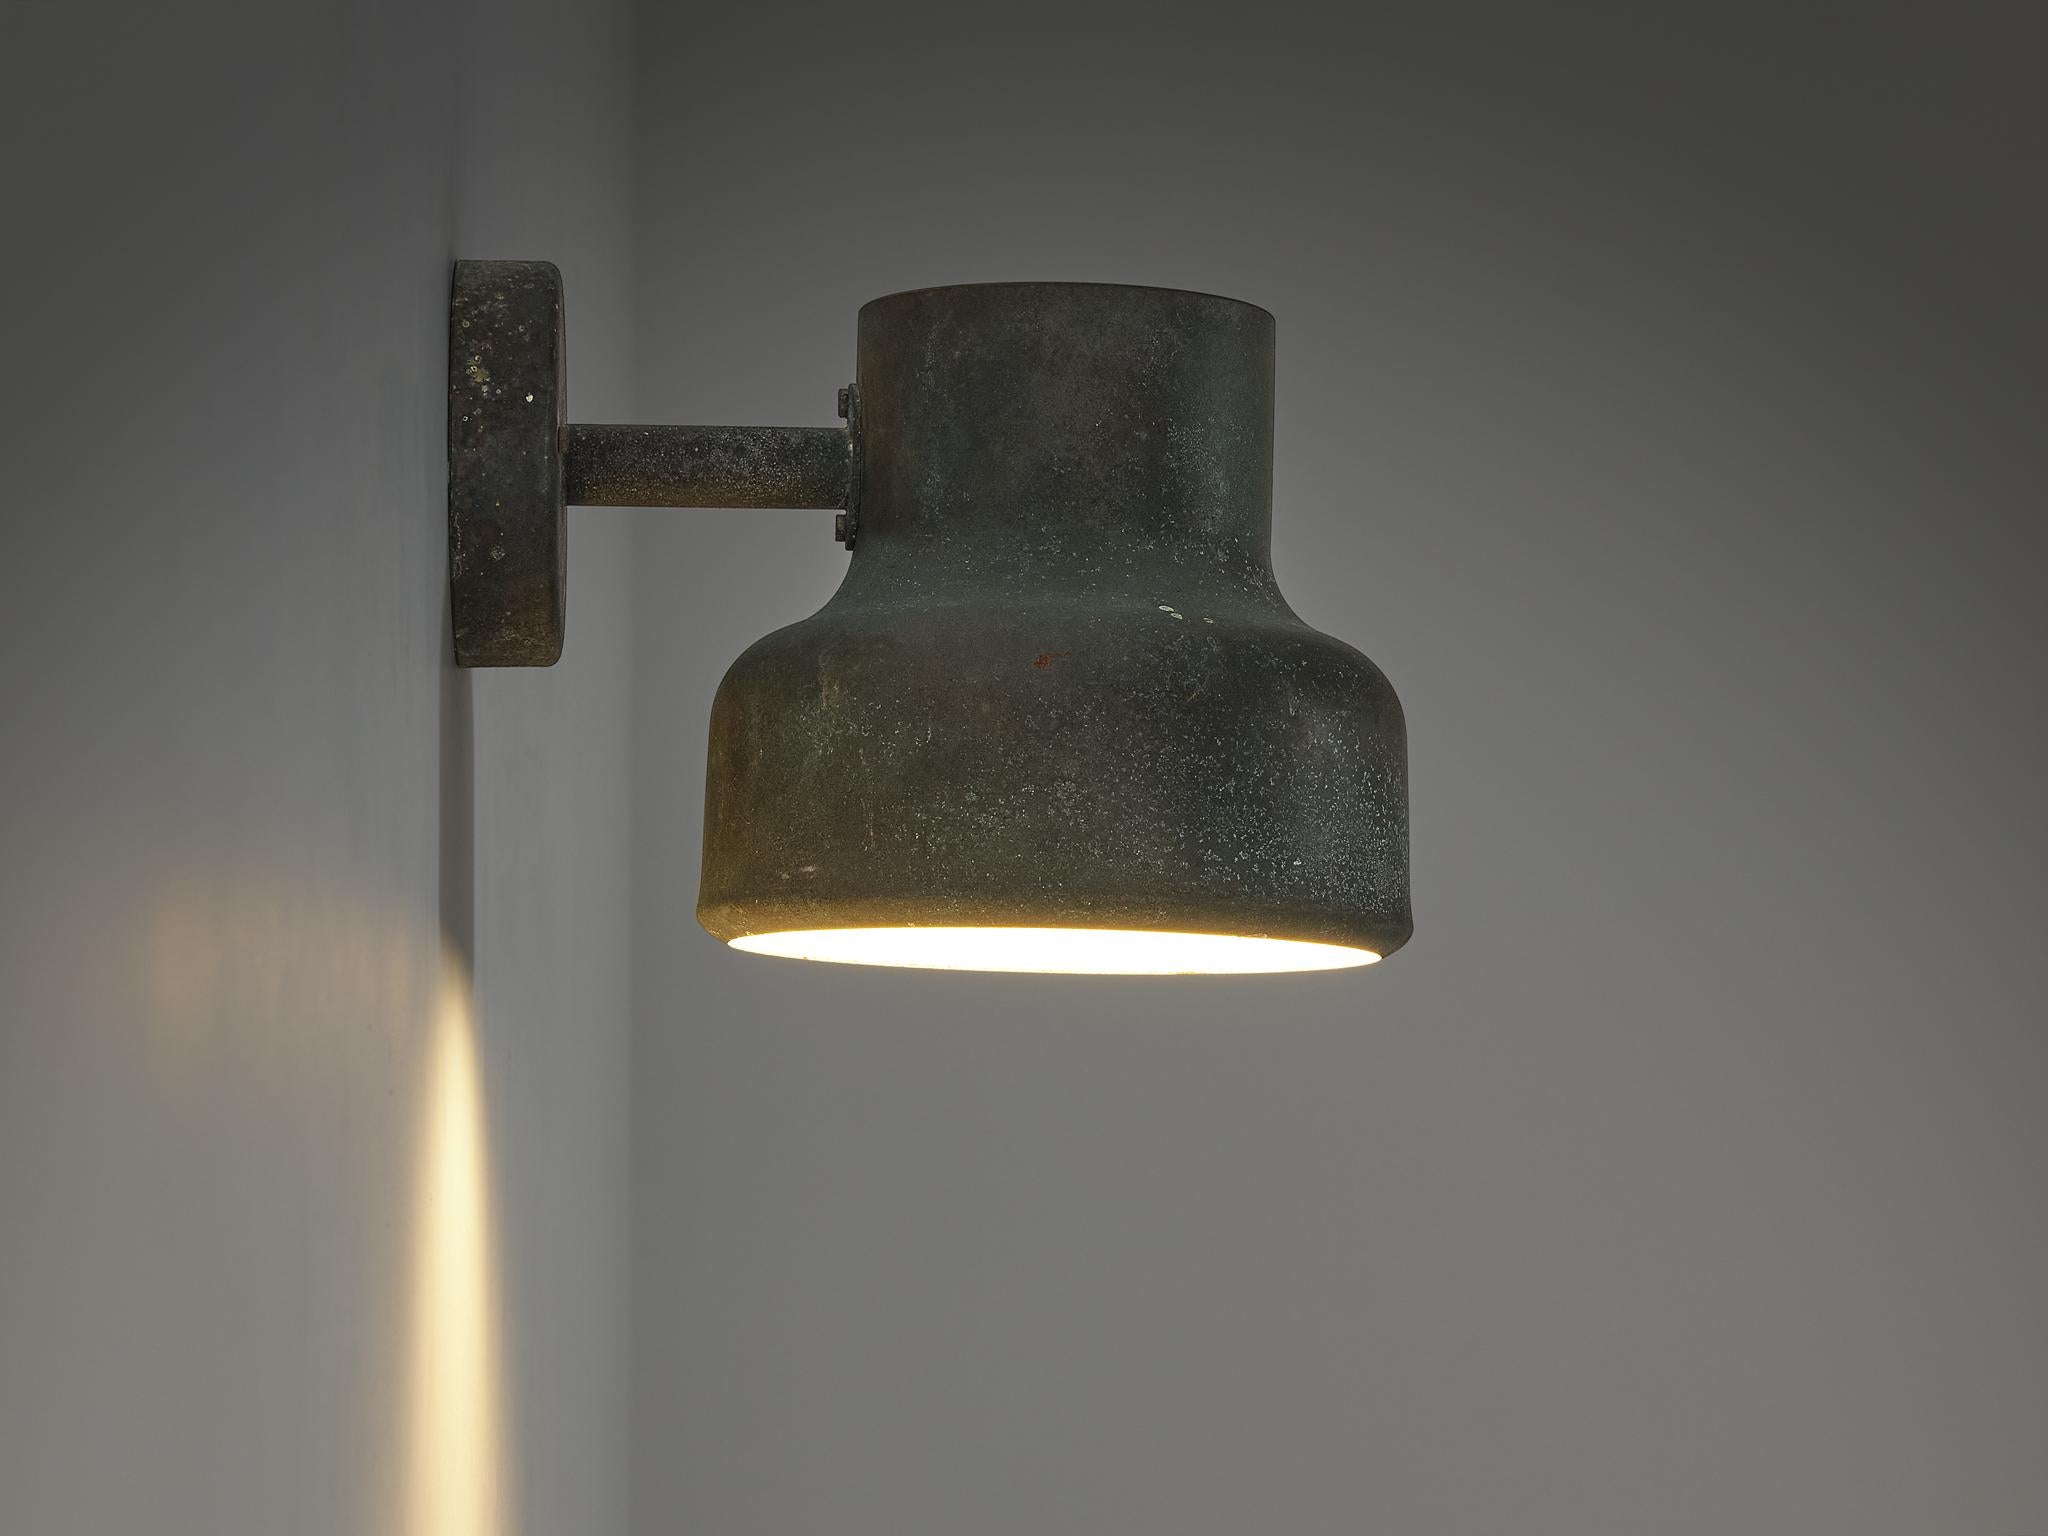 Scandinavian Modern Anders Pehrson for Ateljé Lyktan 'Bumling Utomhus' Wall Light in Copper 